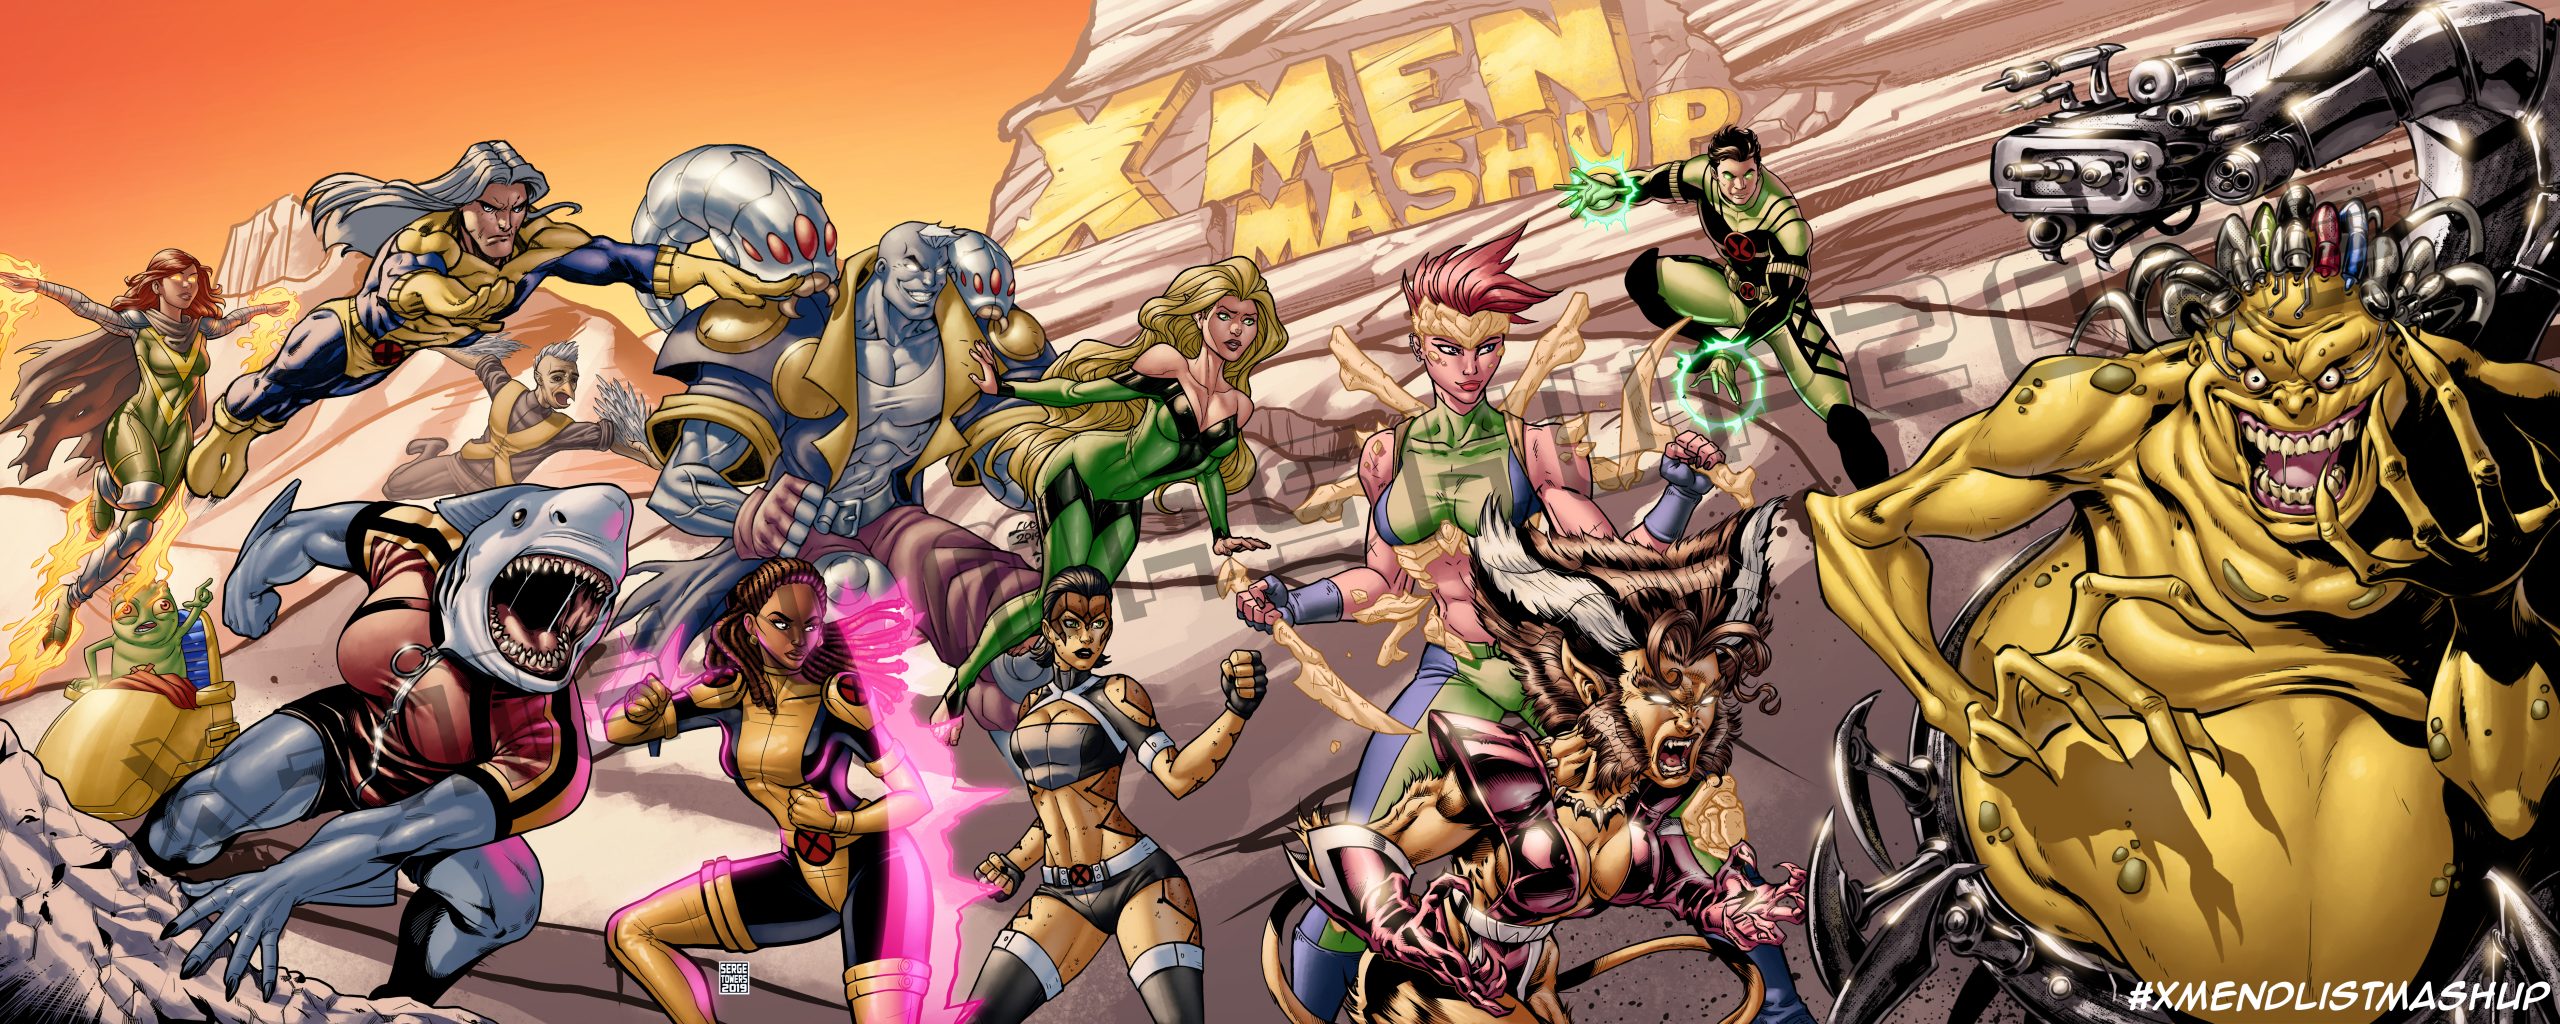 D-list X-Men get centerfold treatment in 'X-Men' #1 homage